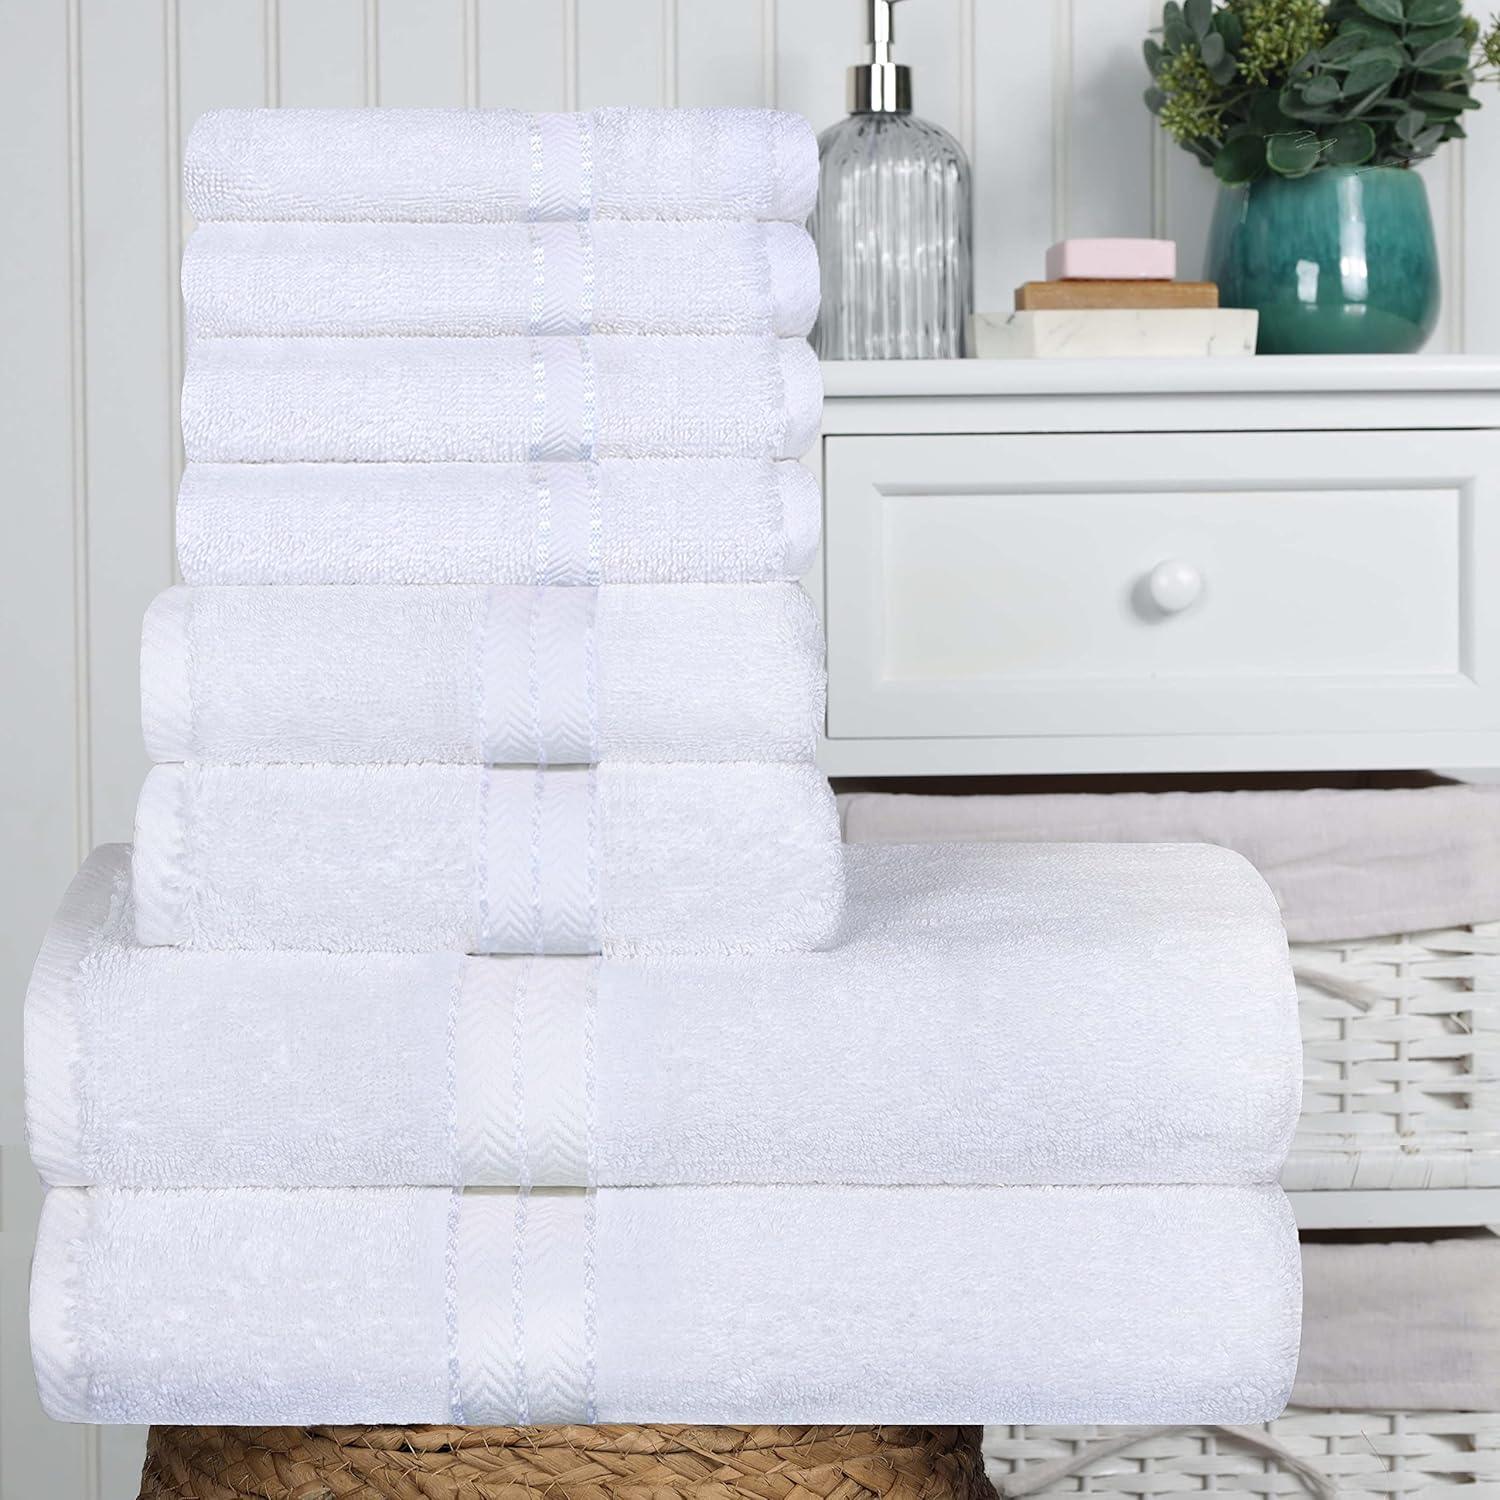 Turkish Cotton Heavyweight Plush 8 Piece Towel Set - Towel Set by Superior - Superior 